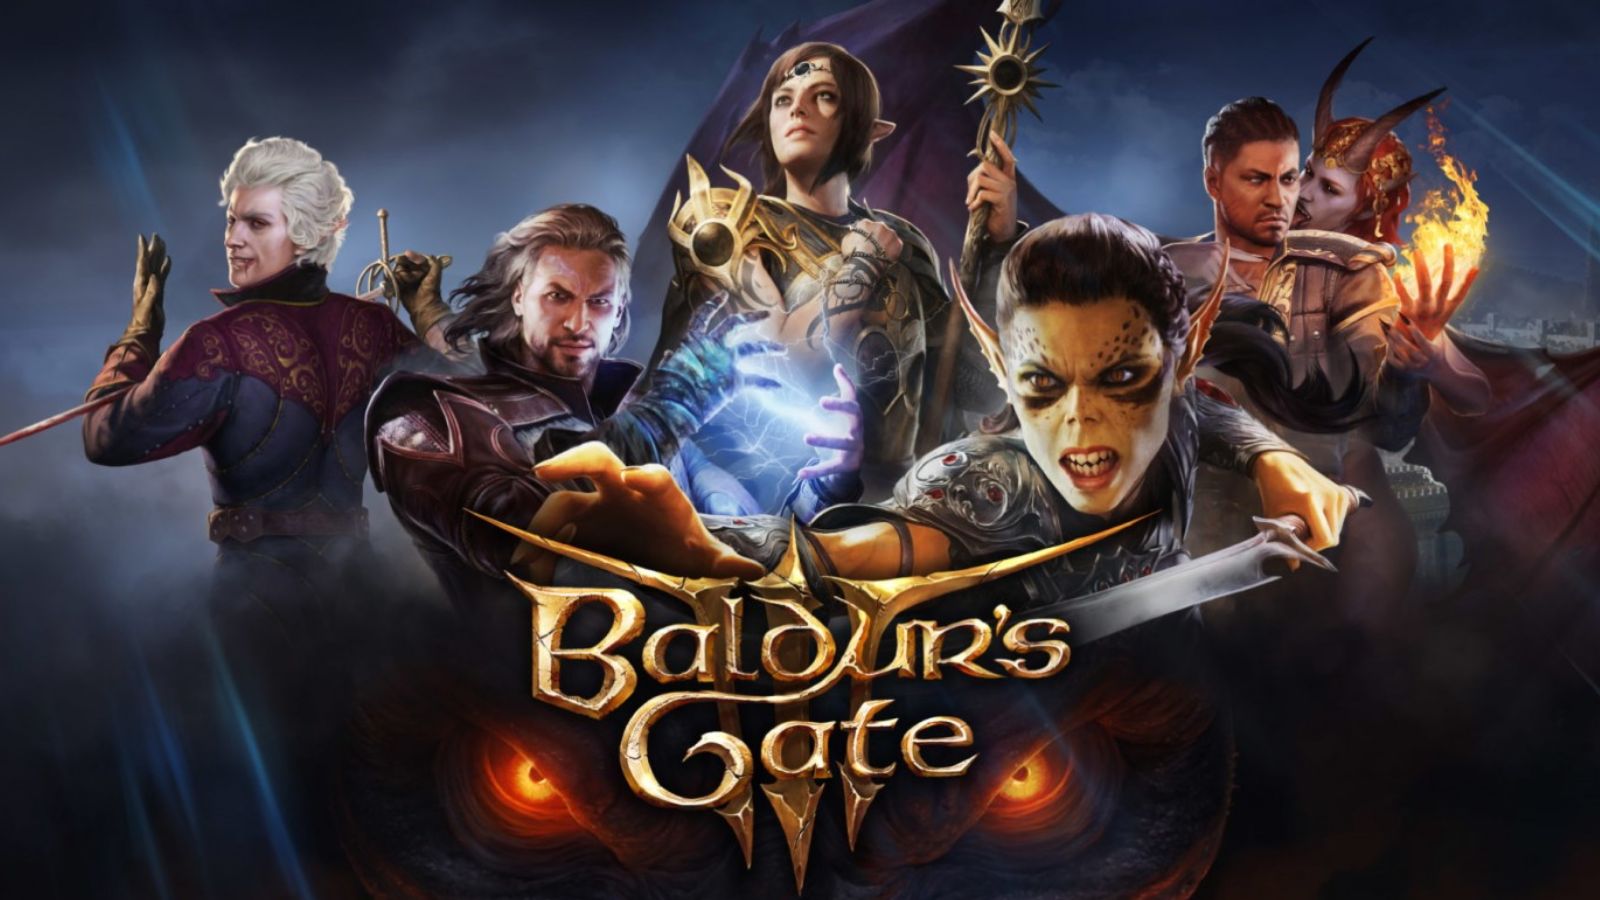 Baldur's Gate 3 - Reveal Trailer